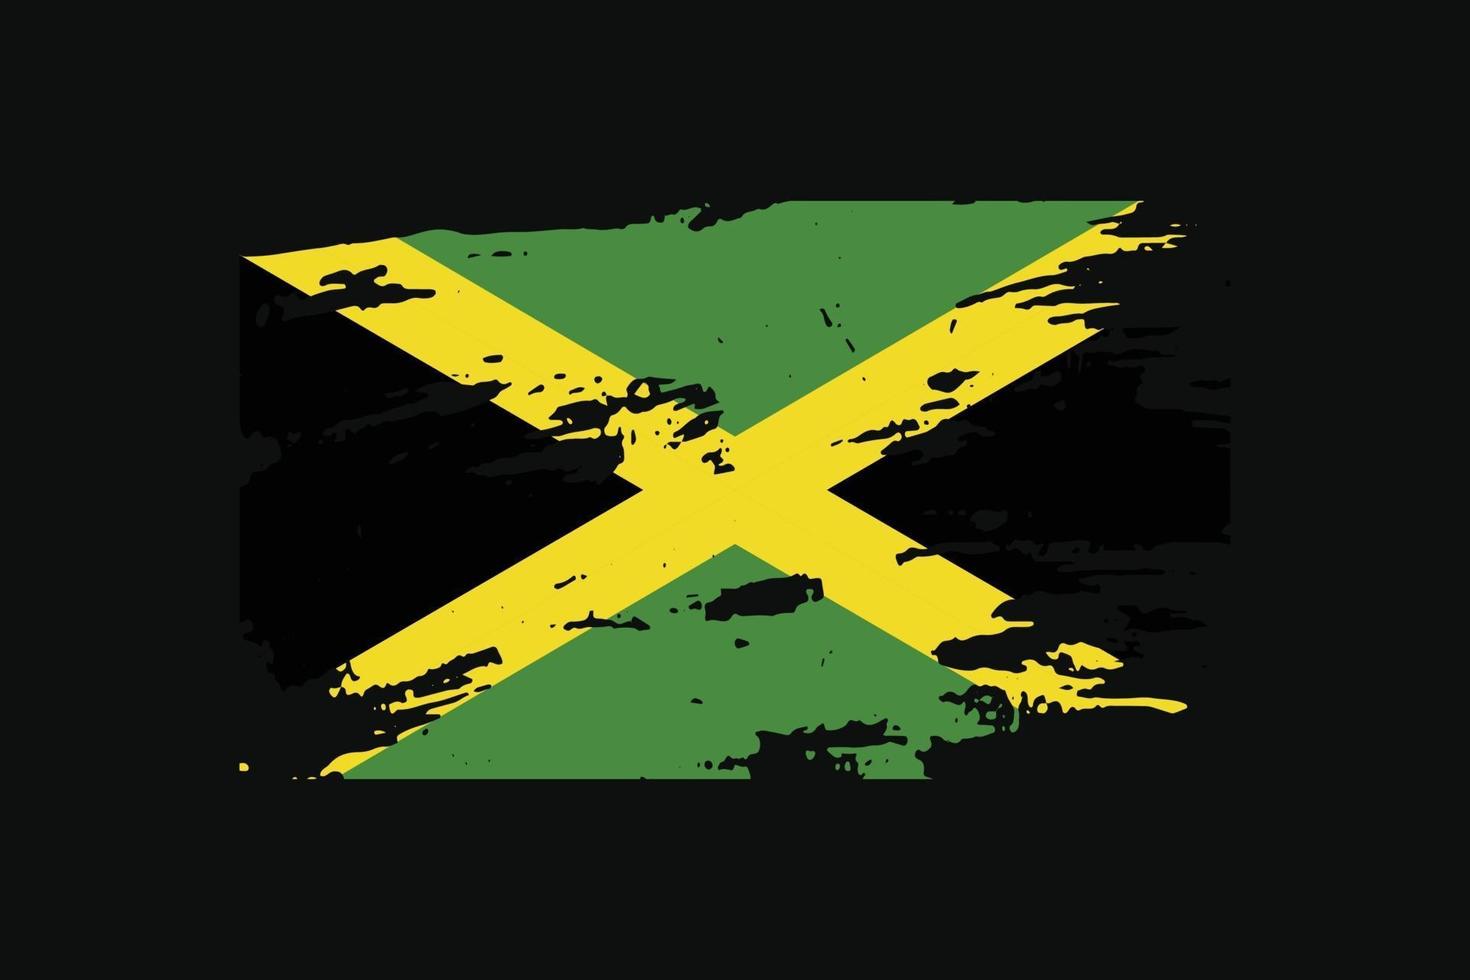 jamaikas flagga i grungestil. vektor illustration.